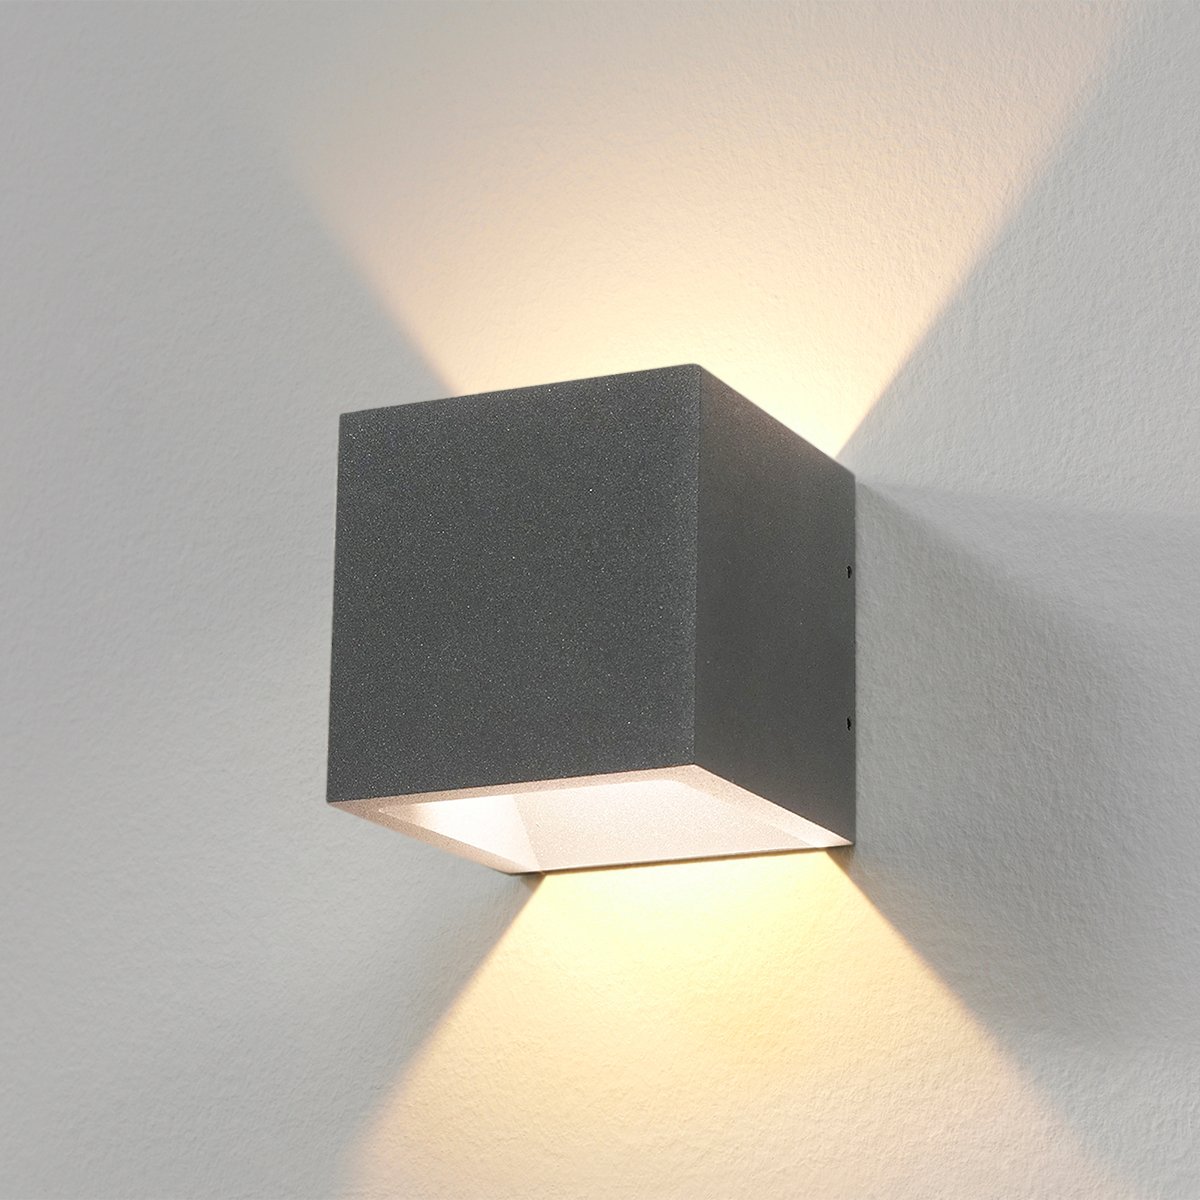 Wall lamp Cube up down grey Torno - 10 cm